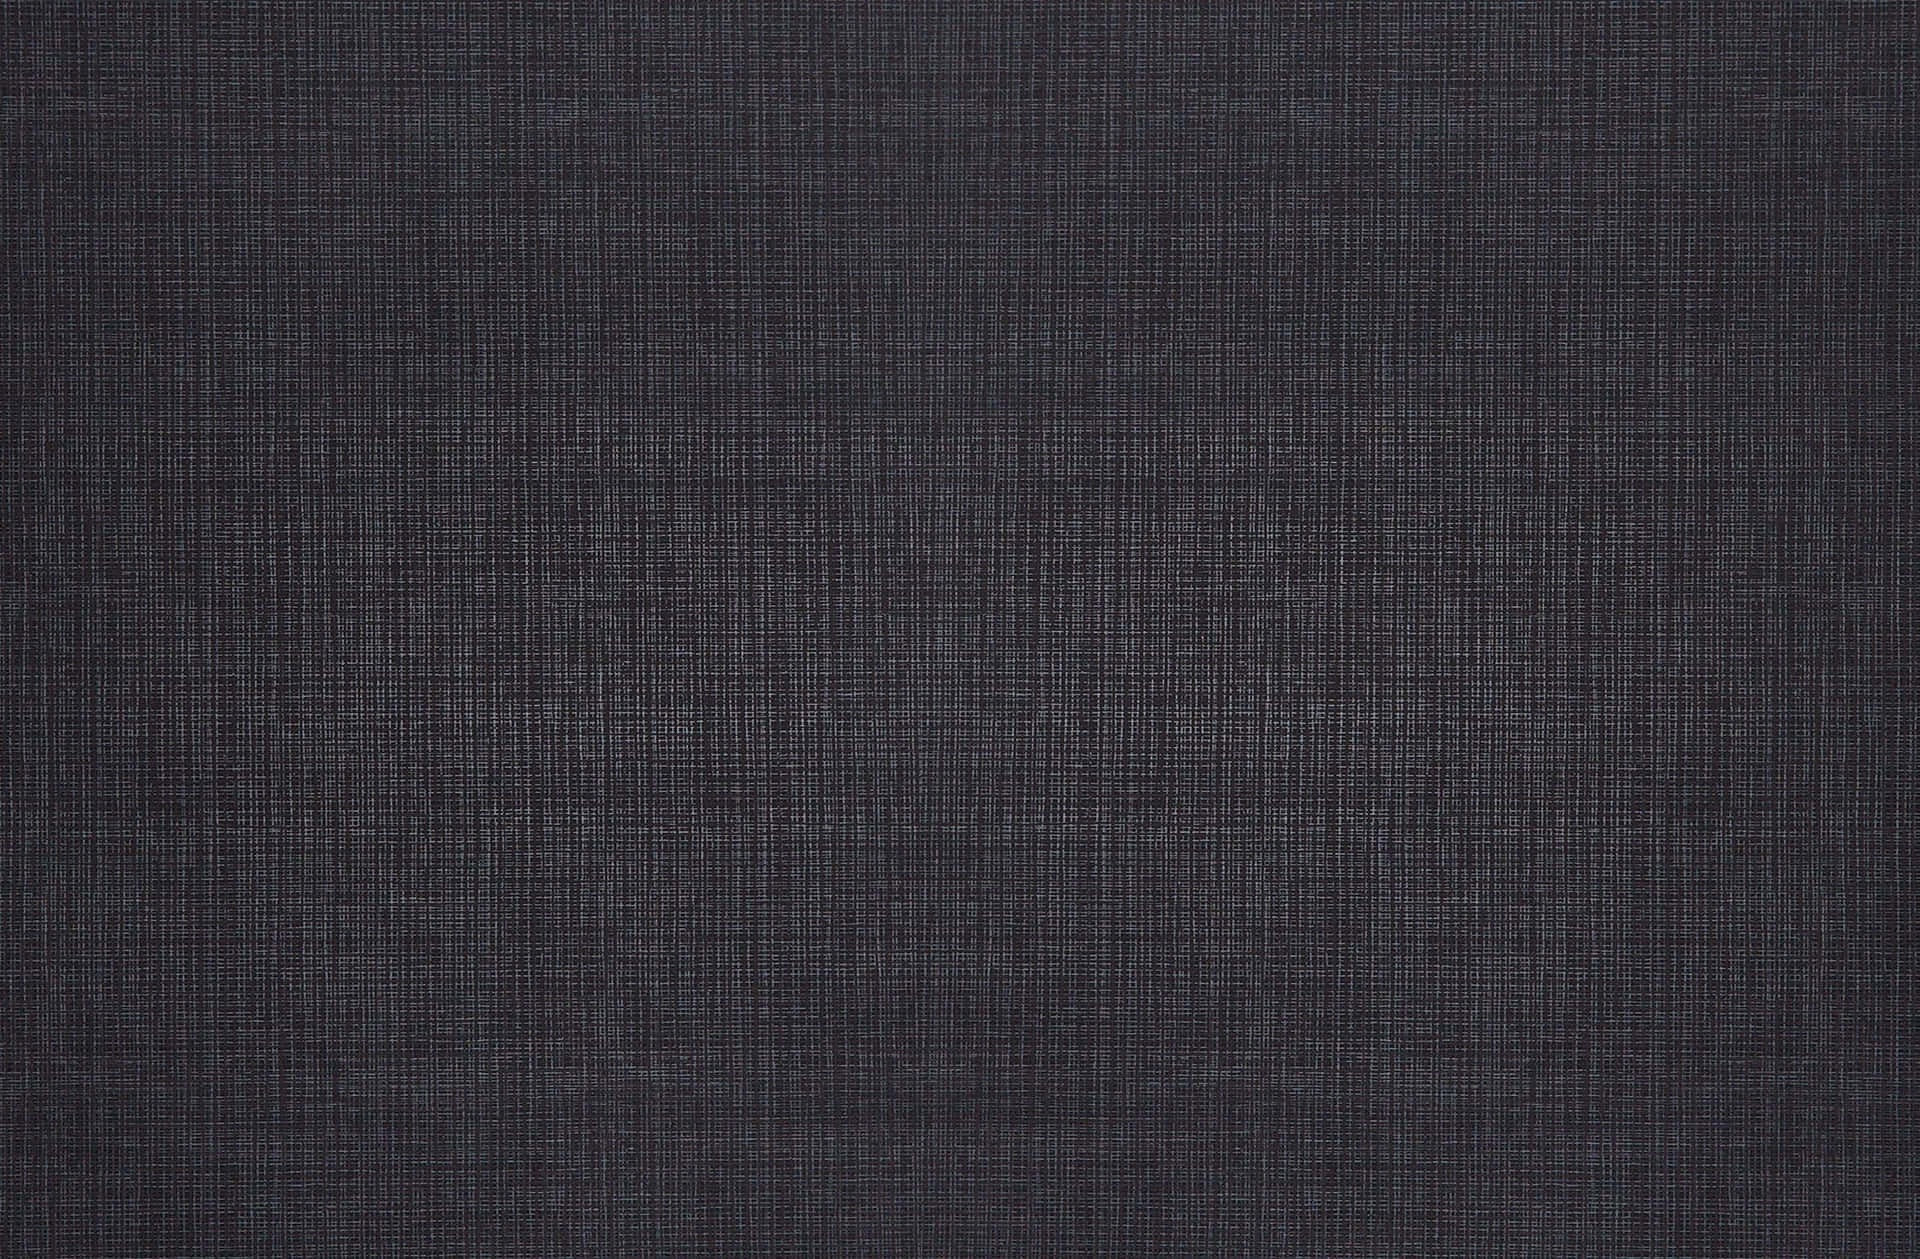 A solid, dark grey background Wallpaper